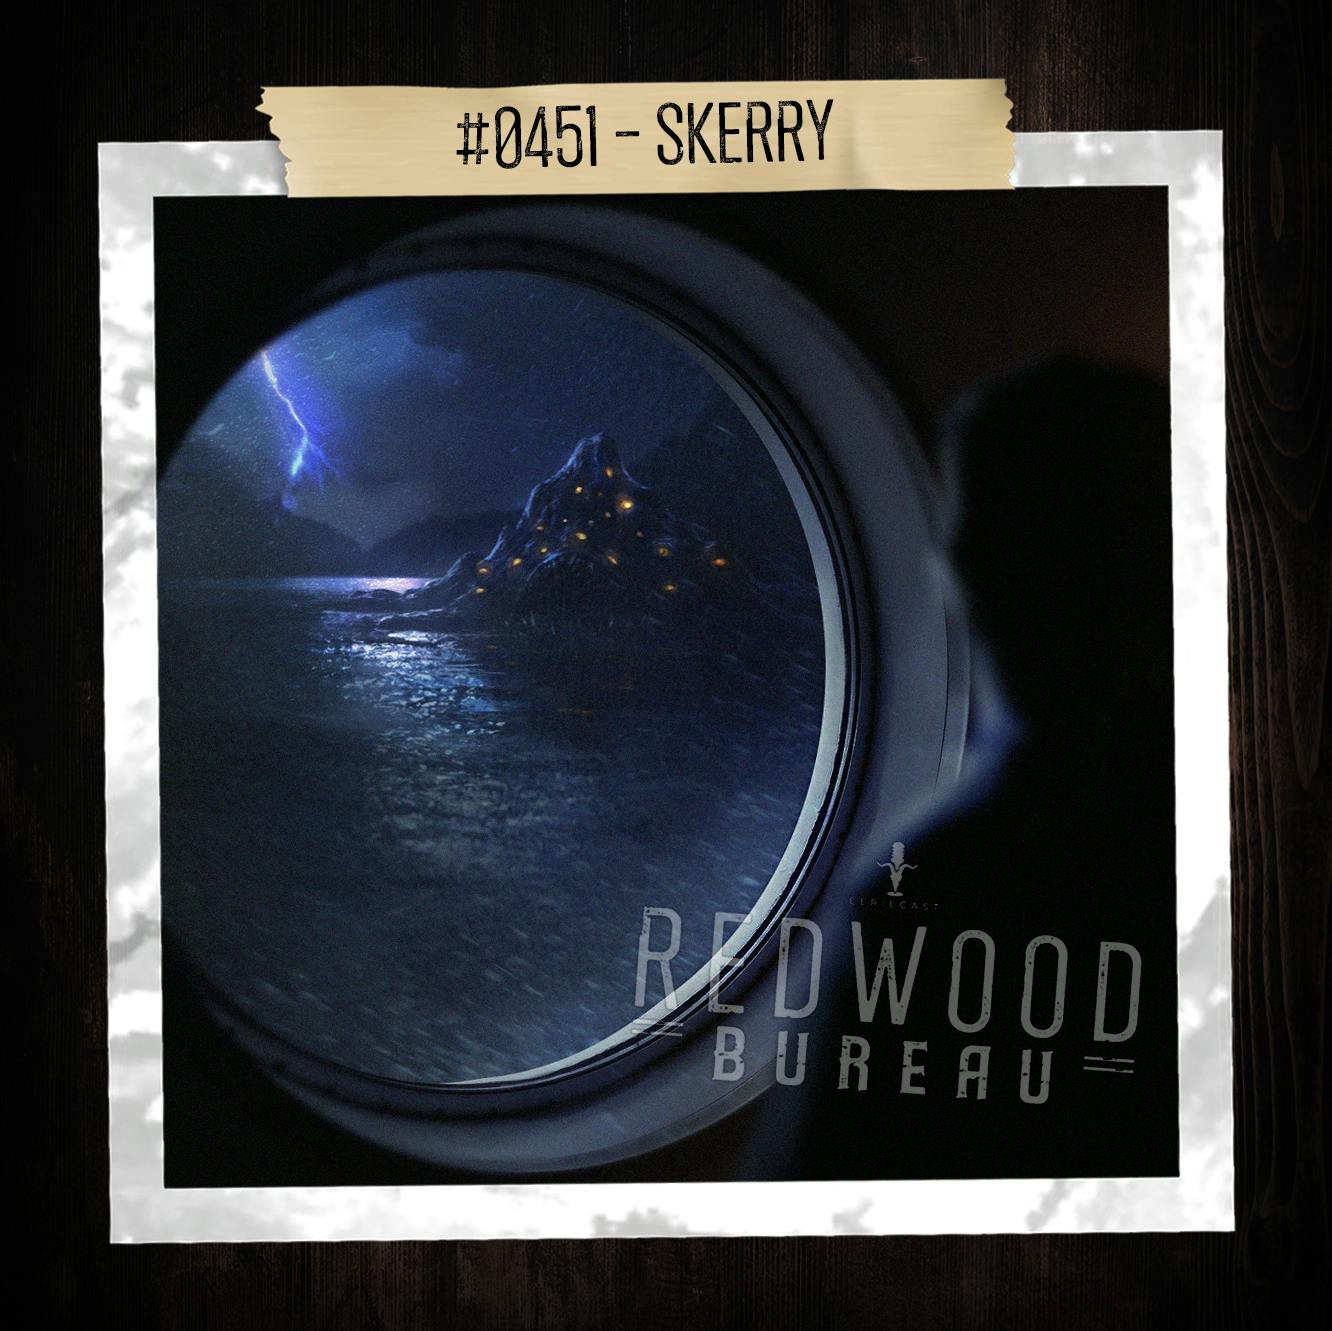 "SKERRY" - Redwood Bureau Phenomenon #0451